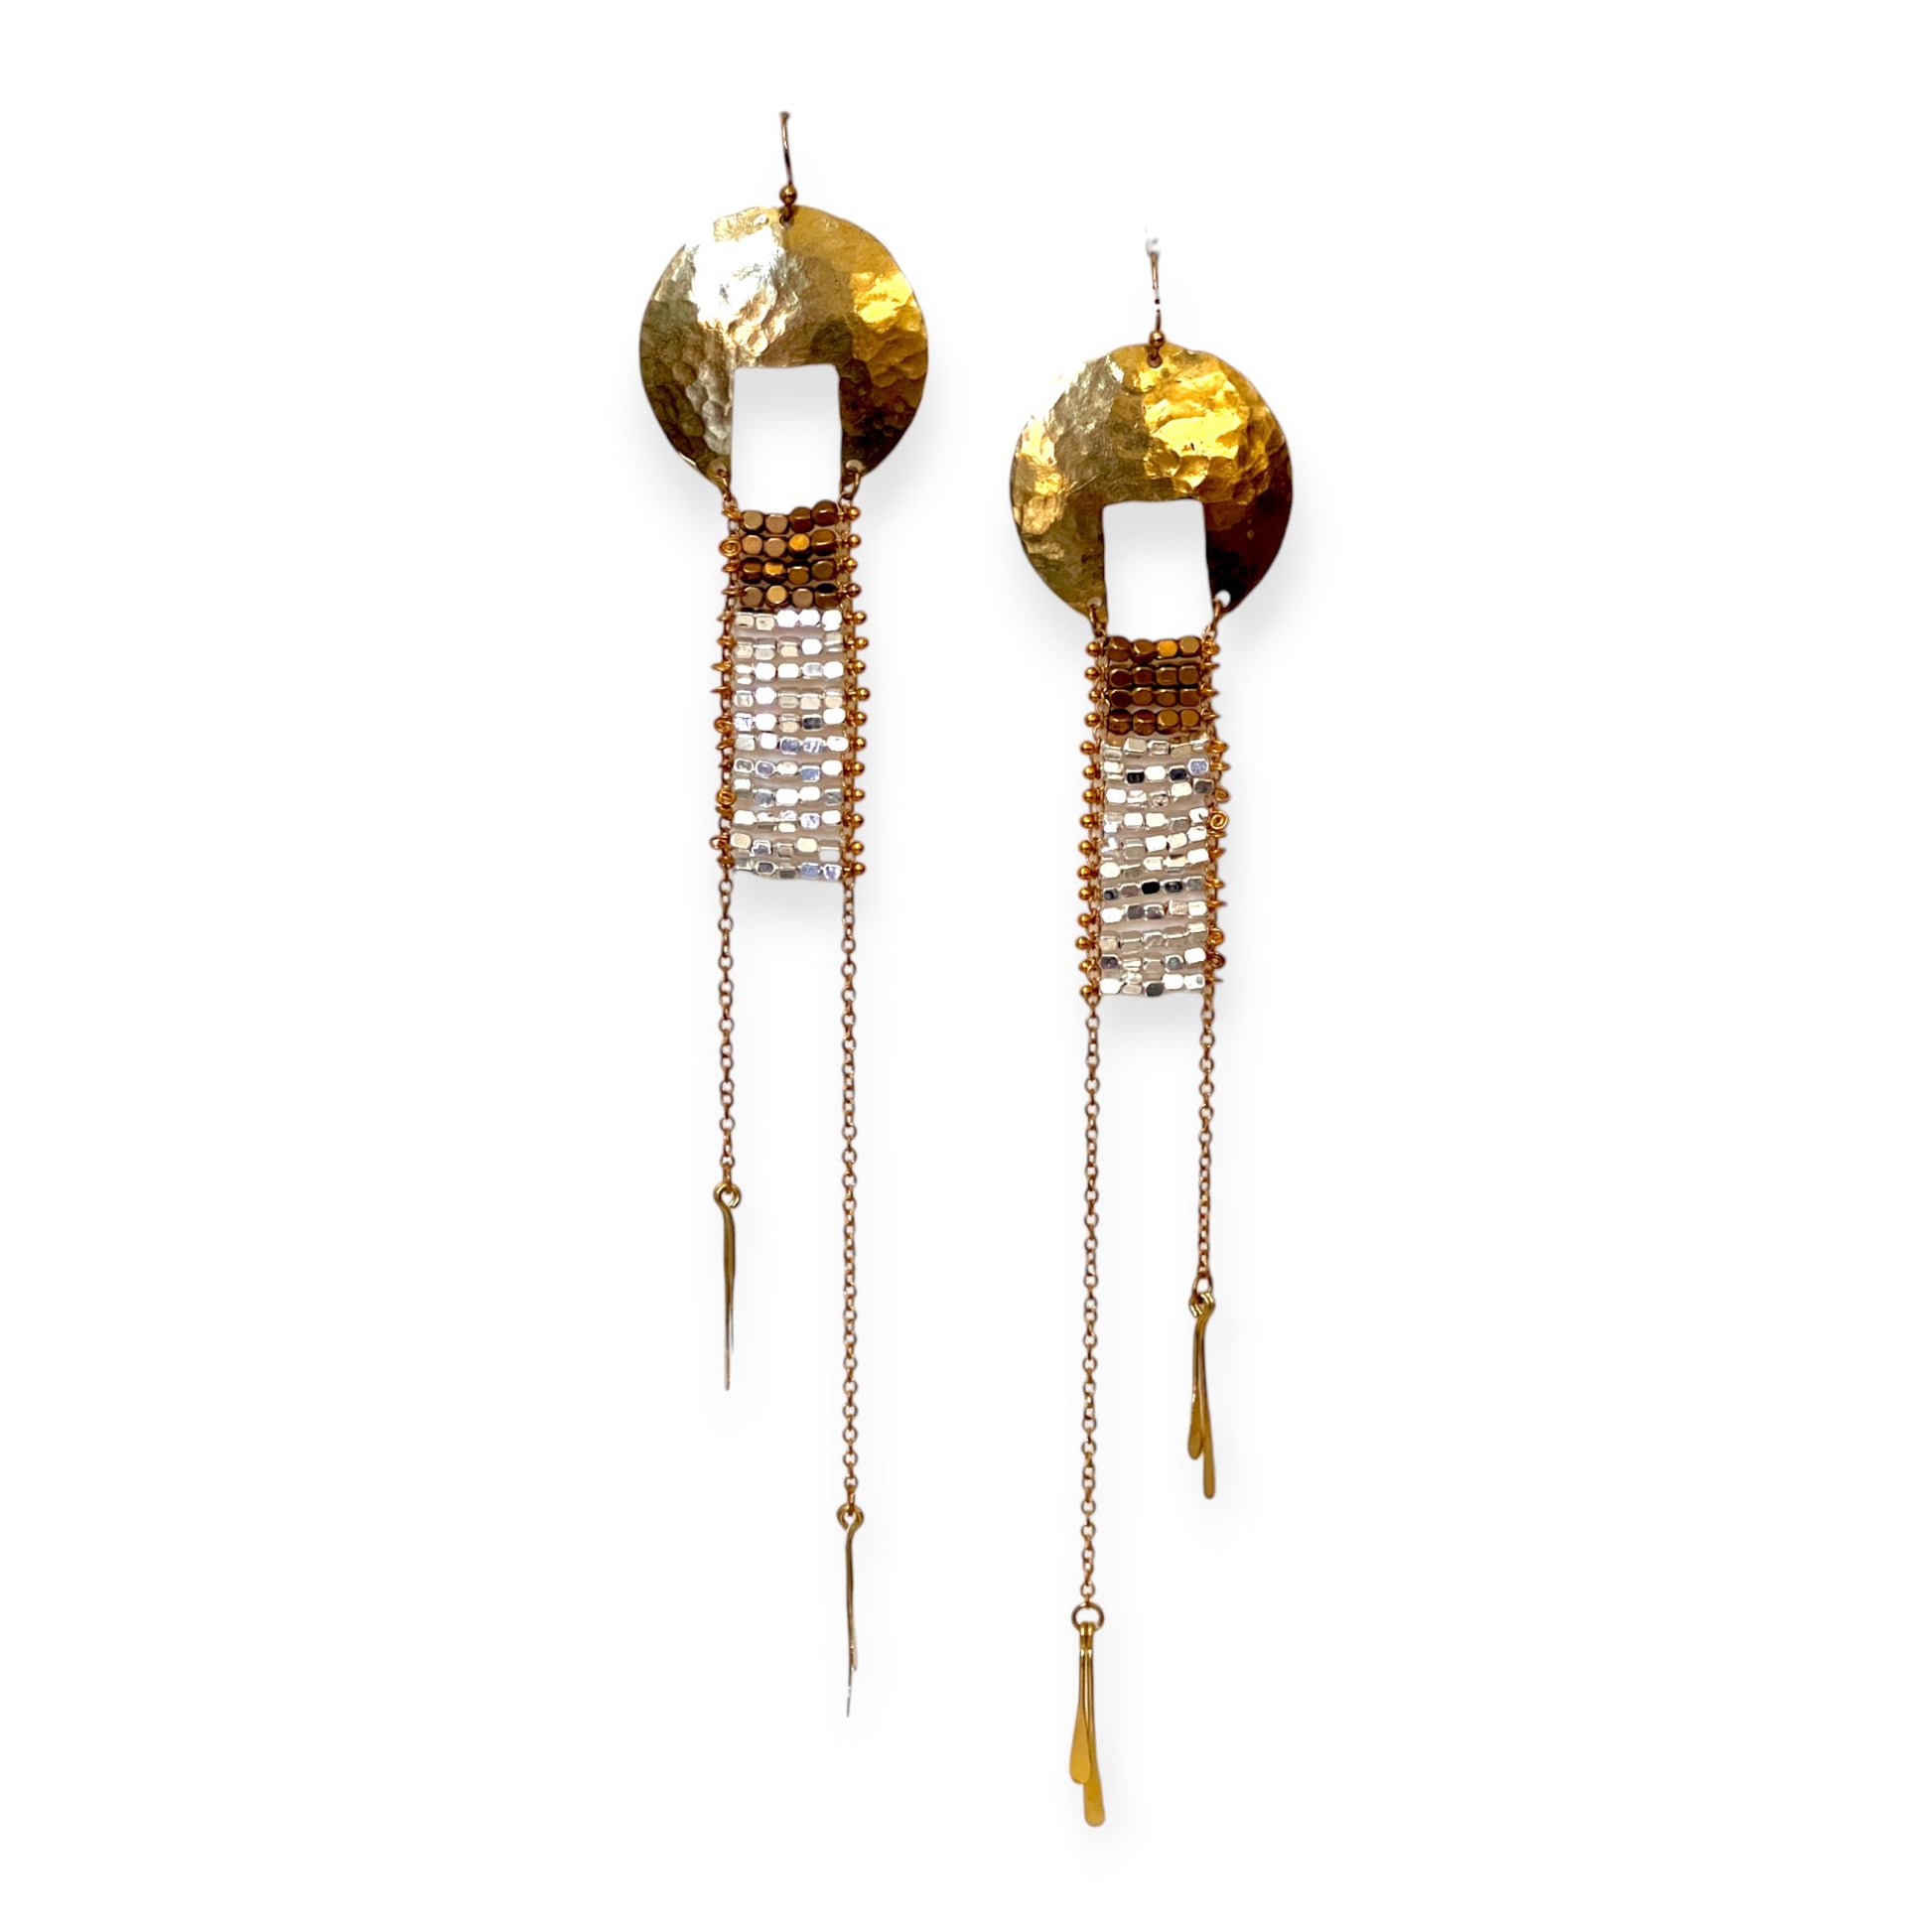 Studio 54 inspired beaded statement earrings - Sundara Joon